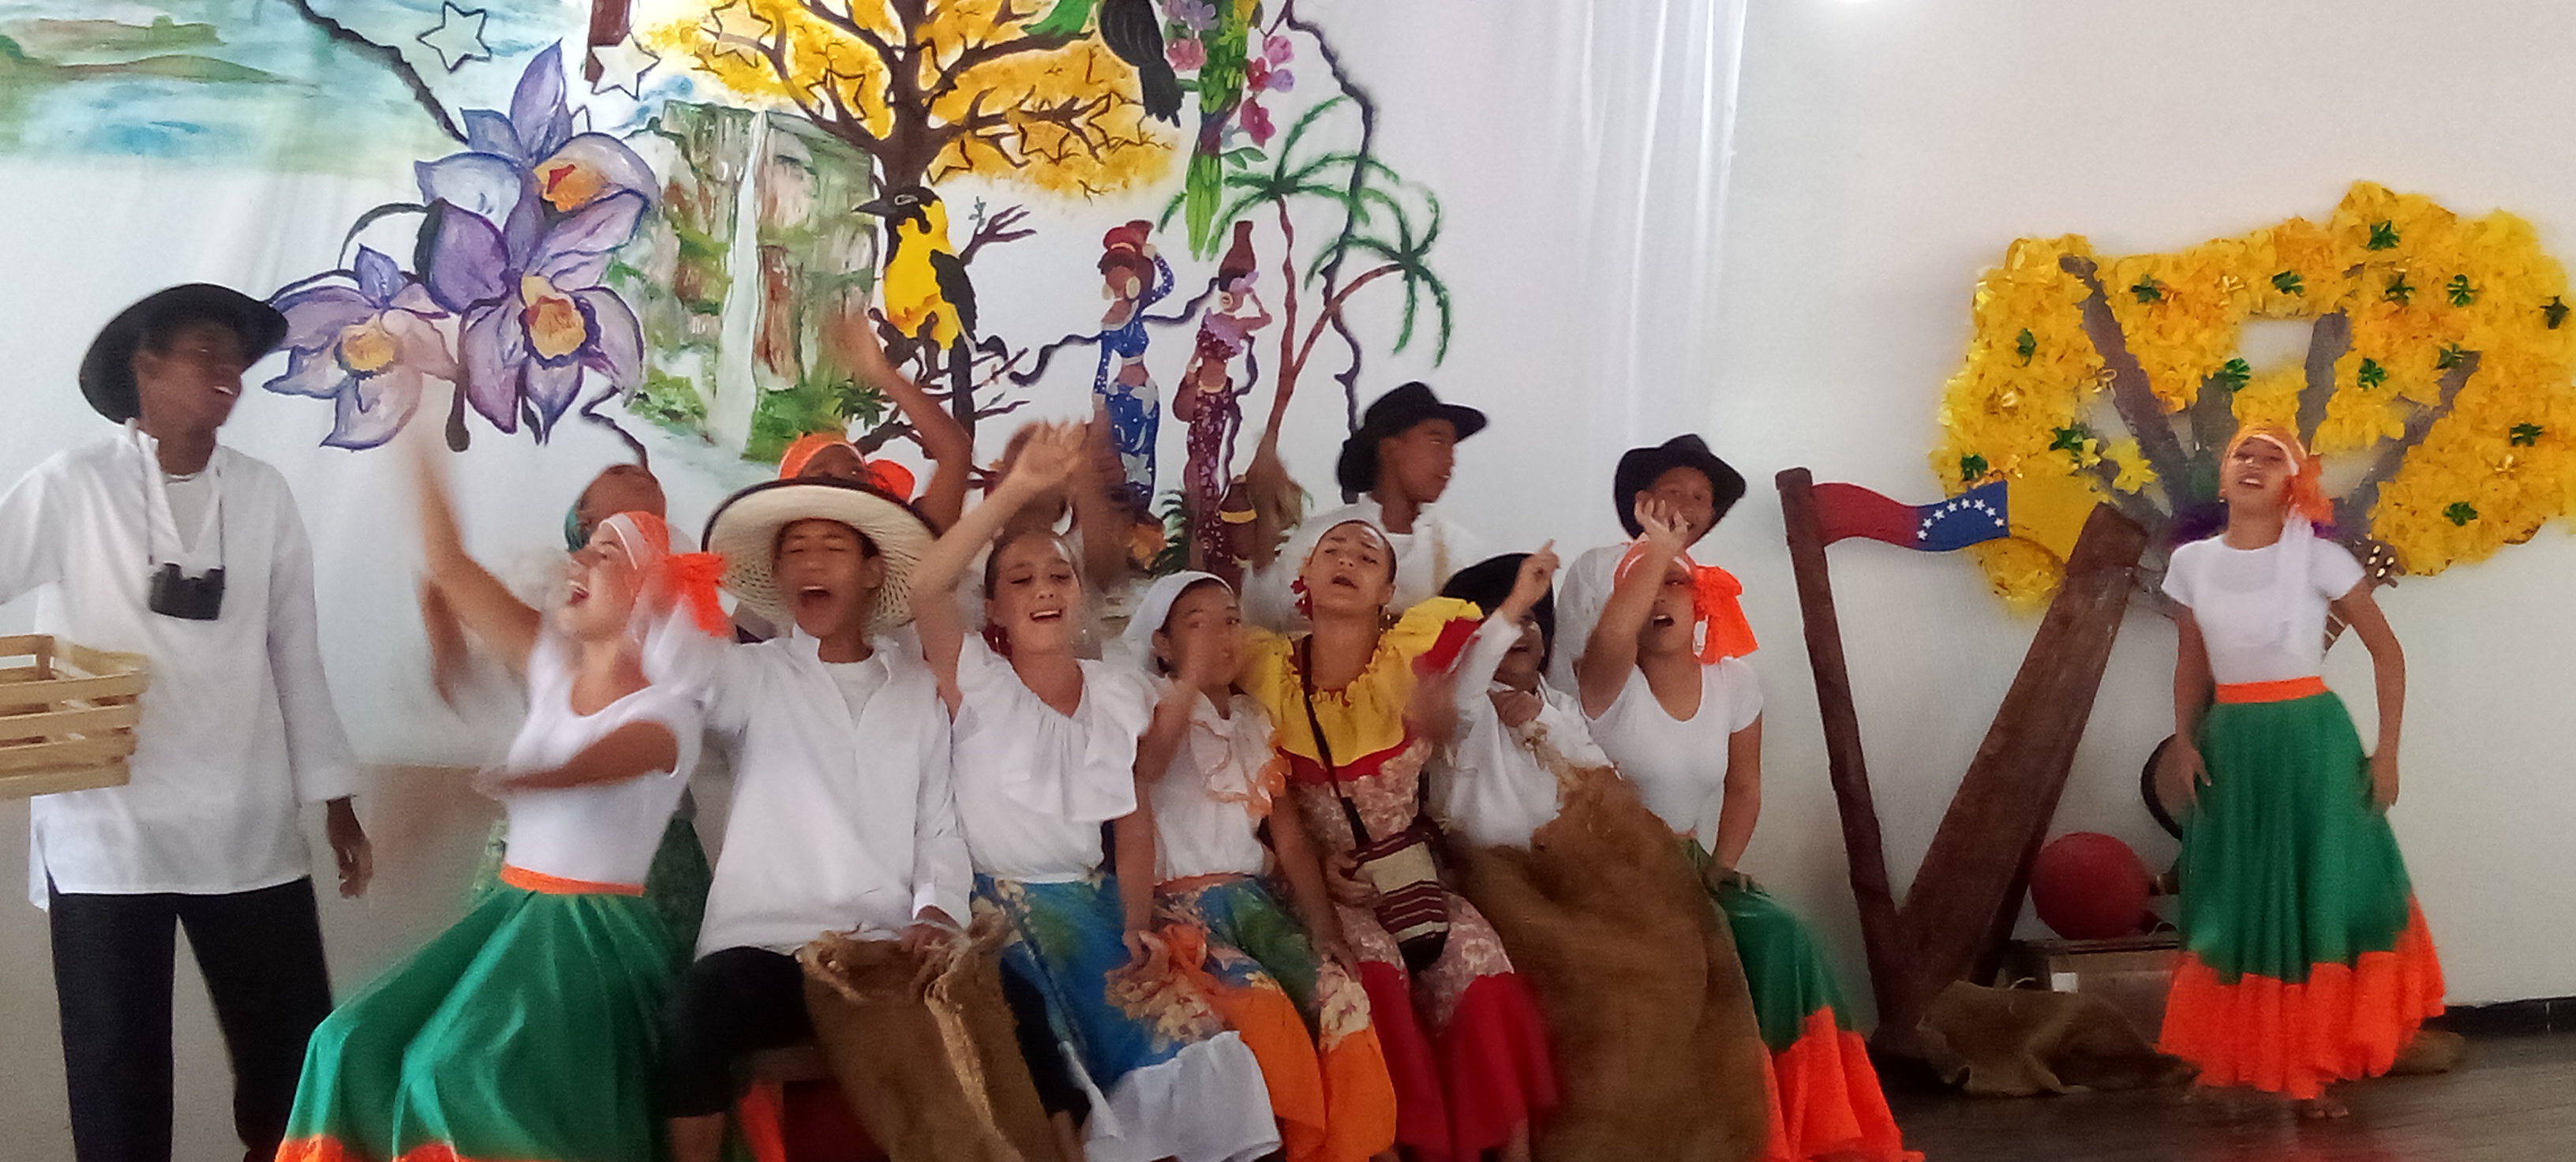 Teatro para niños, otra joya de la cultura venezolana (+Audio) 